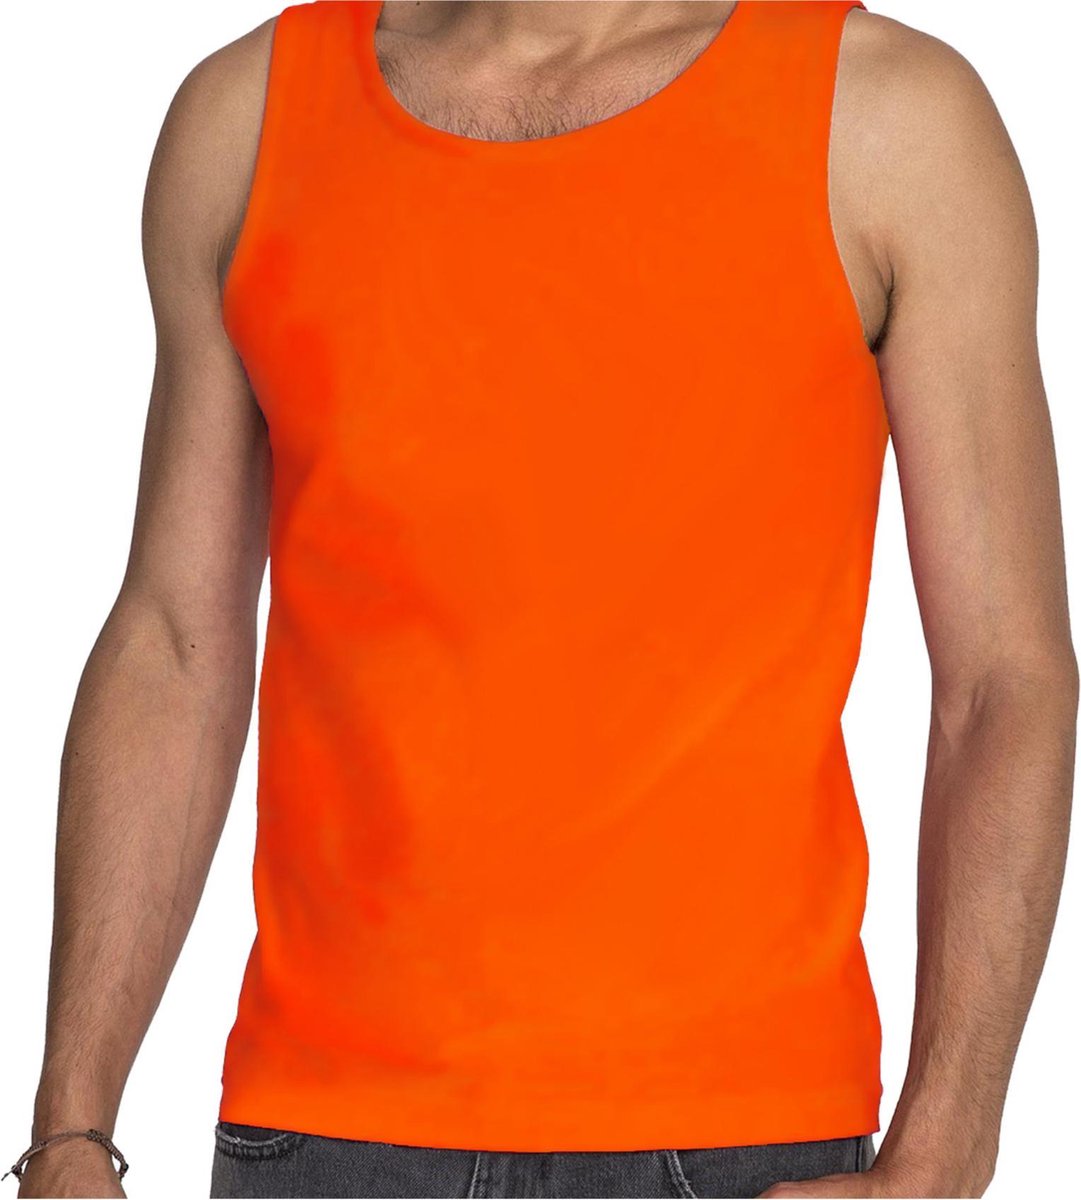 Sols Oranje tanktop / hemdje - heren - EK / WK voetbal supporter / Koningsdag - katoen - mouwloos t-shirt / tanktops / singlet 2XL